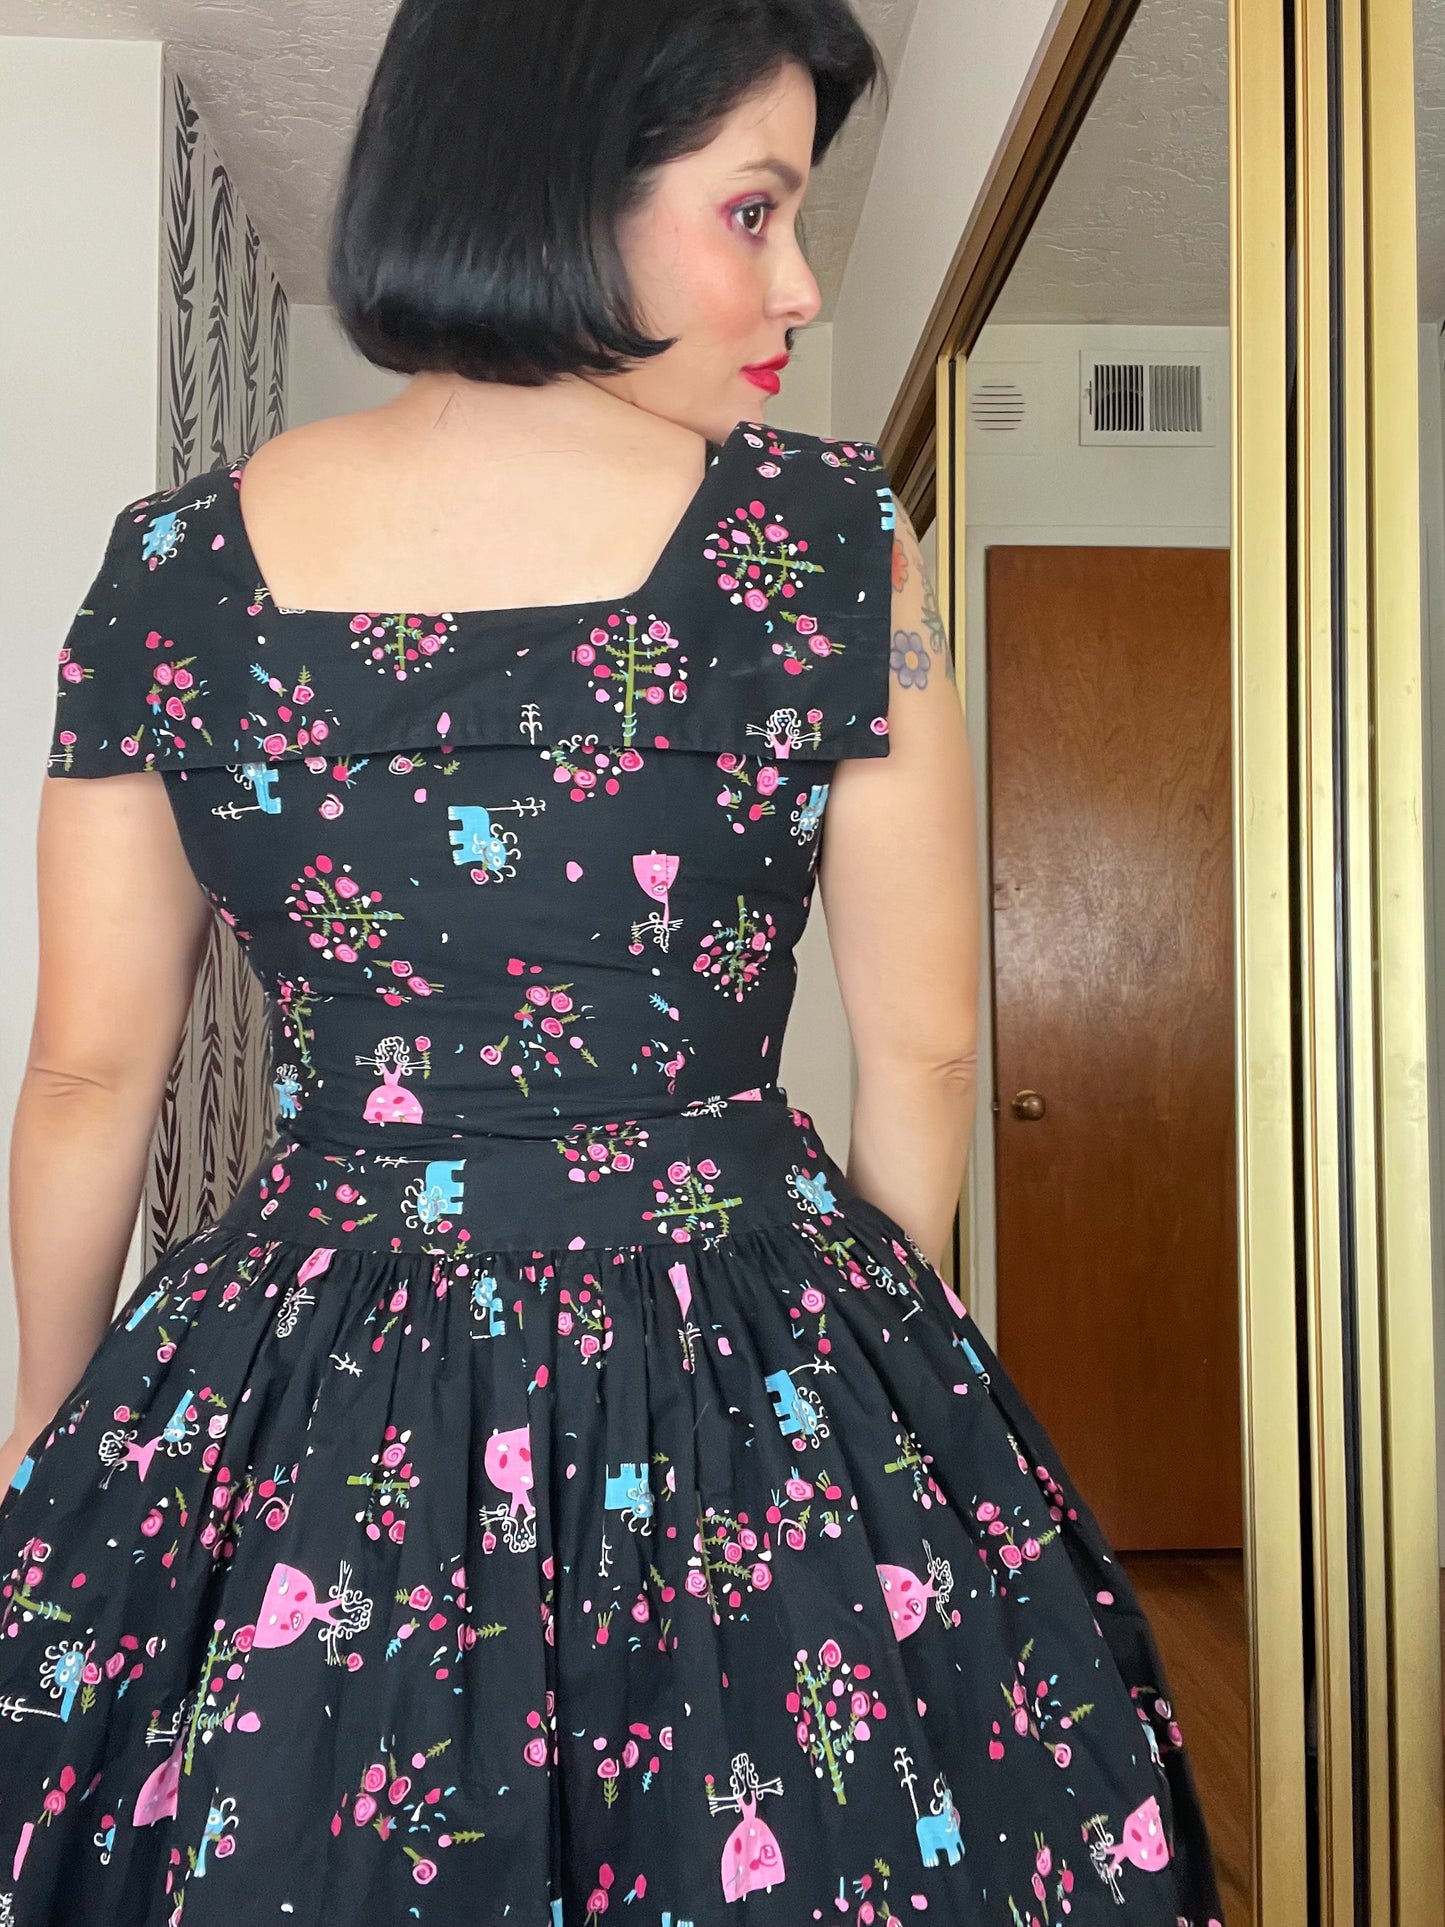 Vintage 50s/ 60s Fairytale Novelty Print Fit Flare Cotton Dress Fits Sizes XS-SM